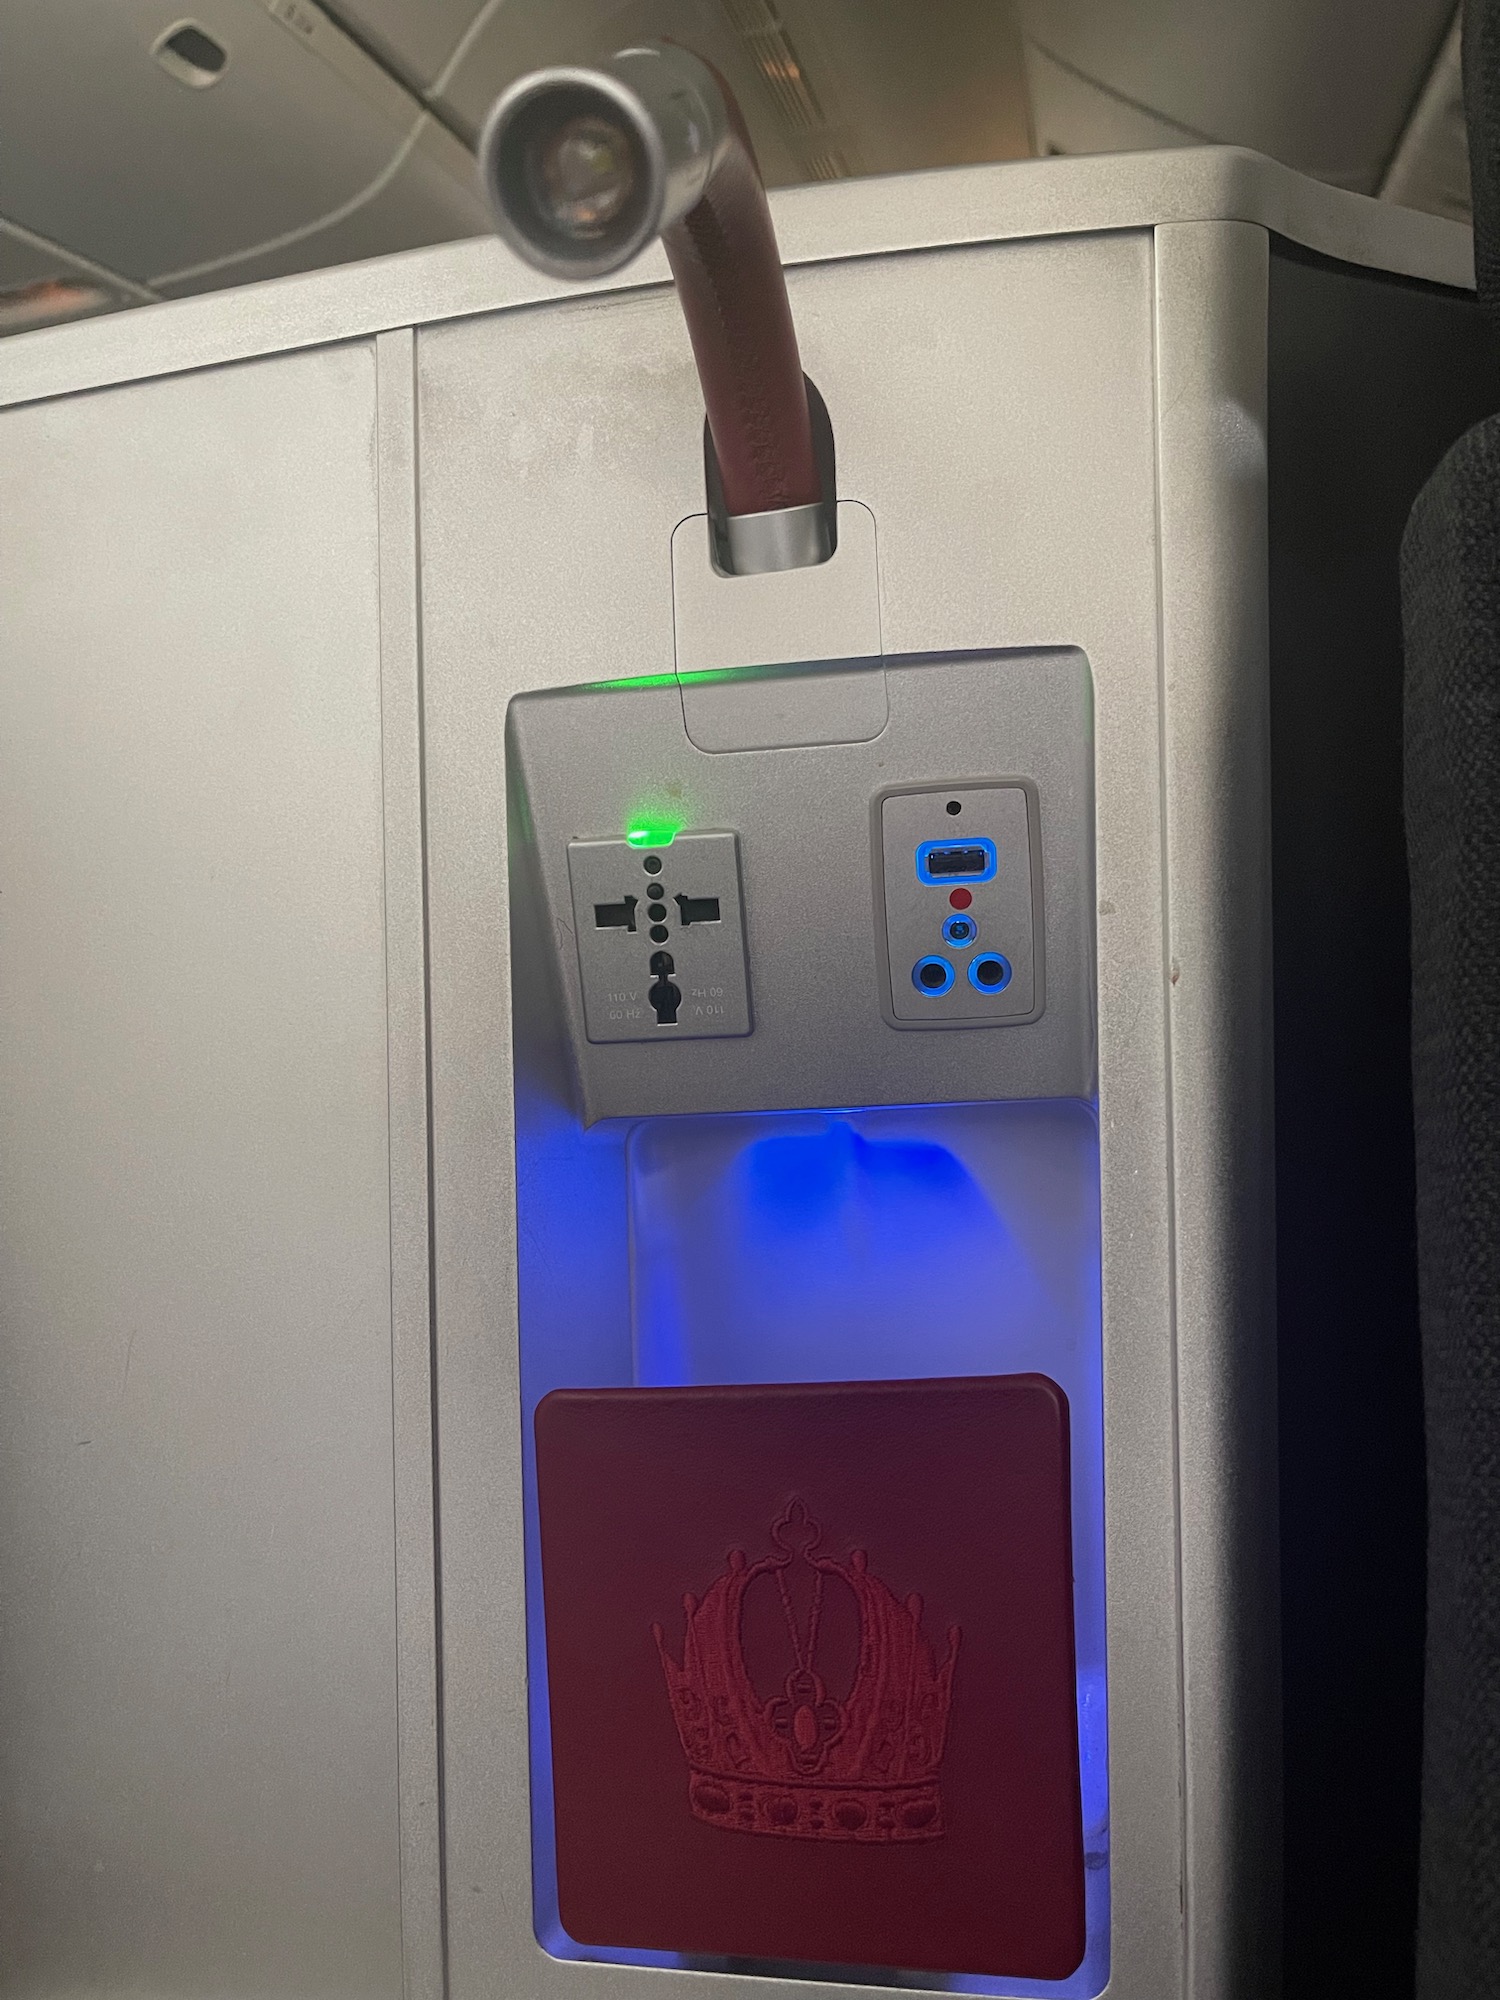 a passport and usb ports on a machine